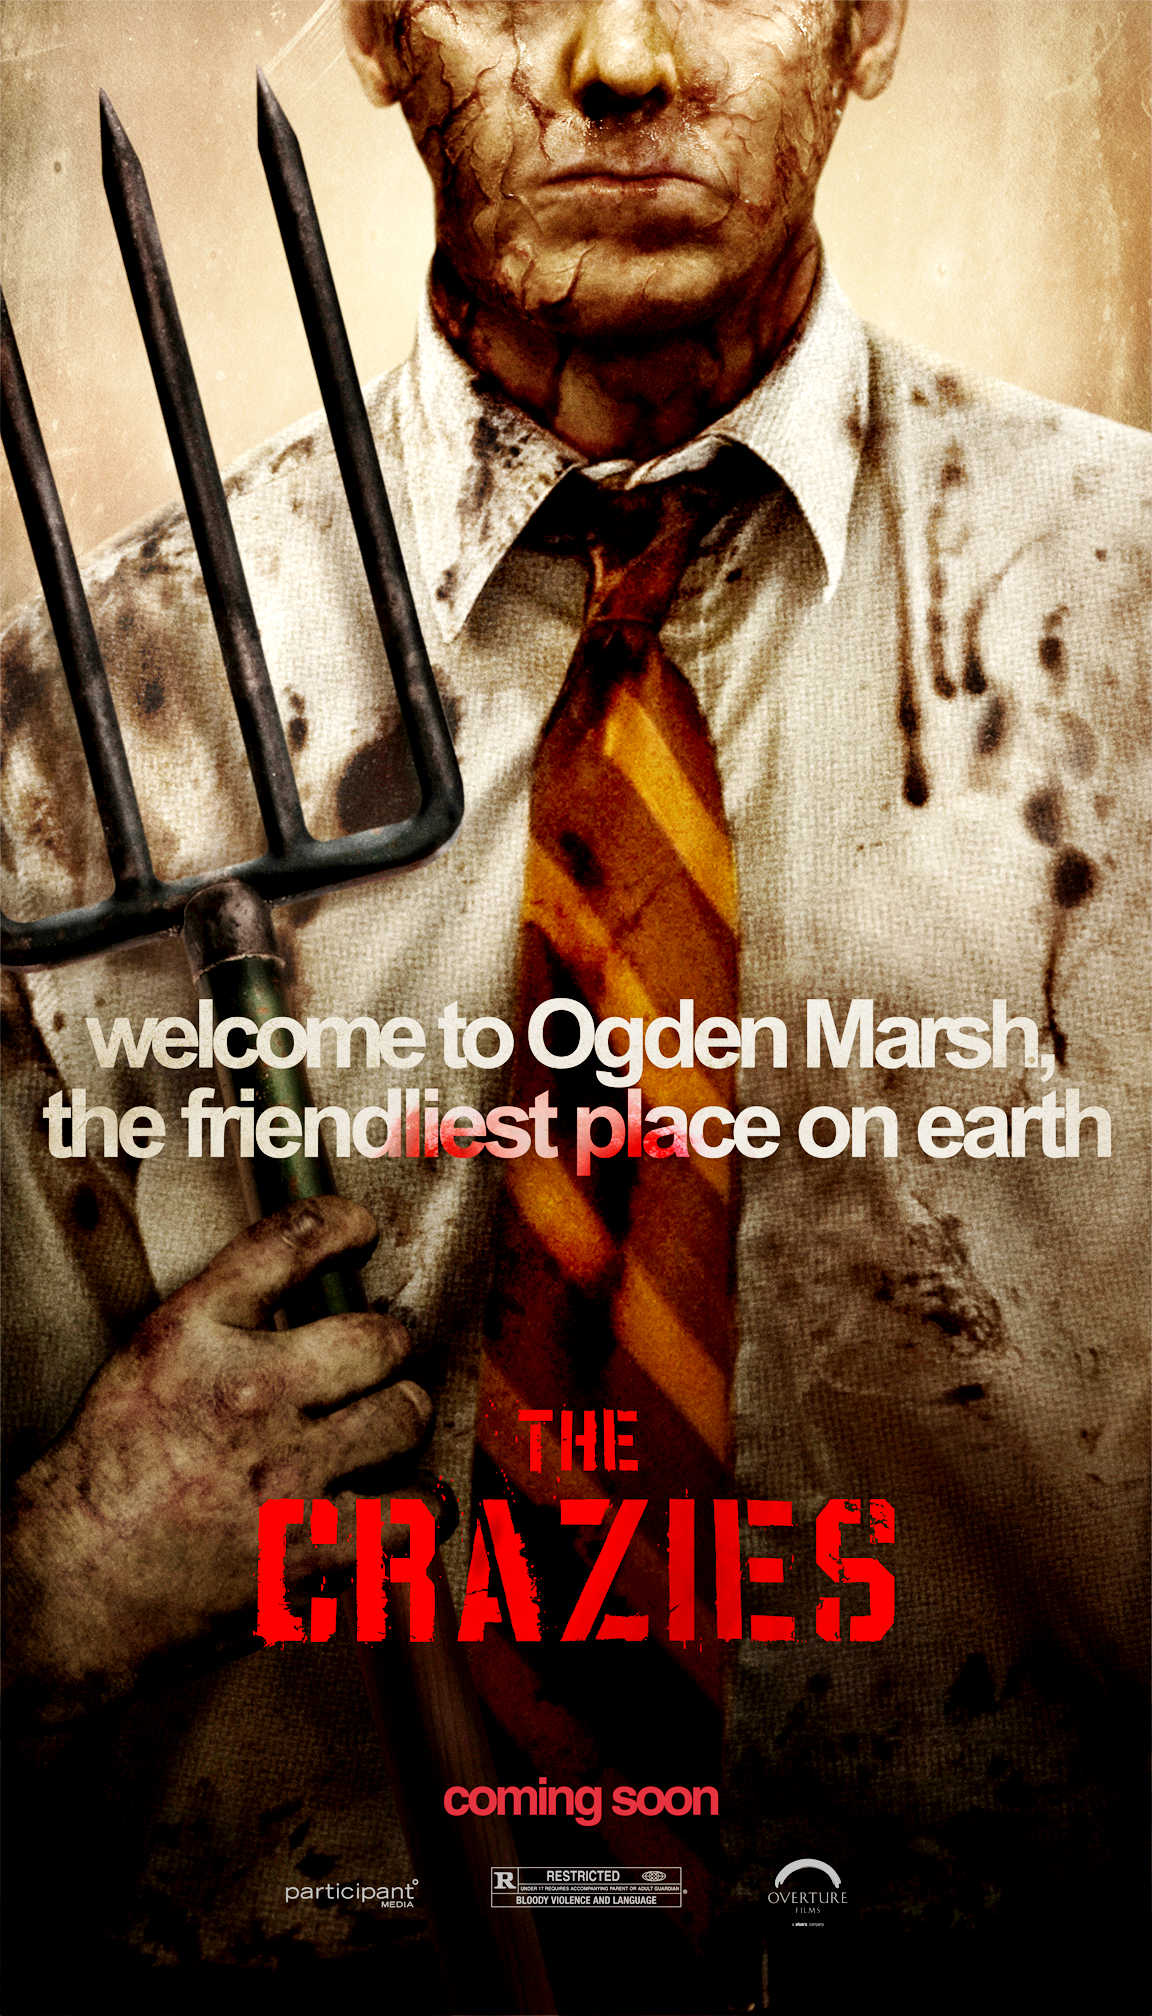 The Crazies #3